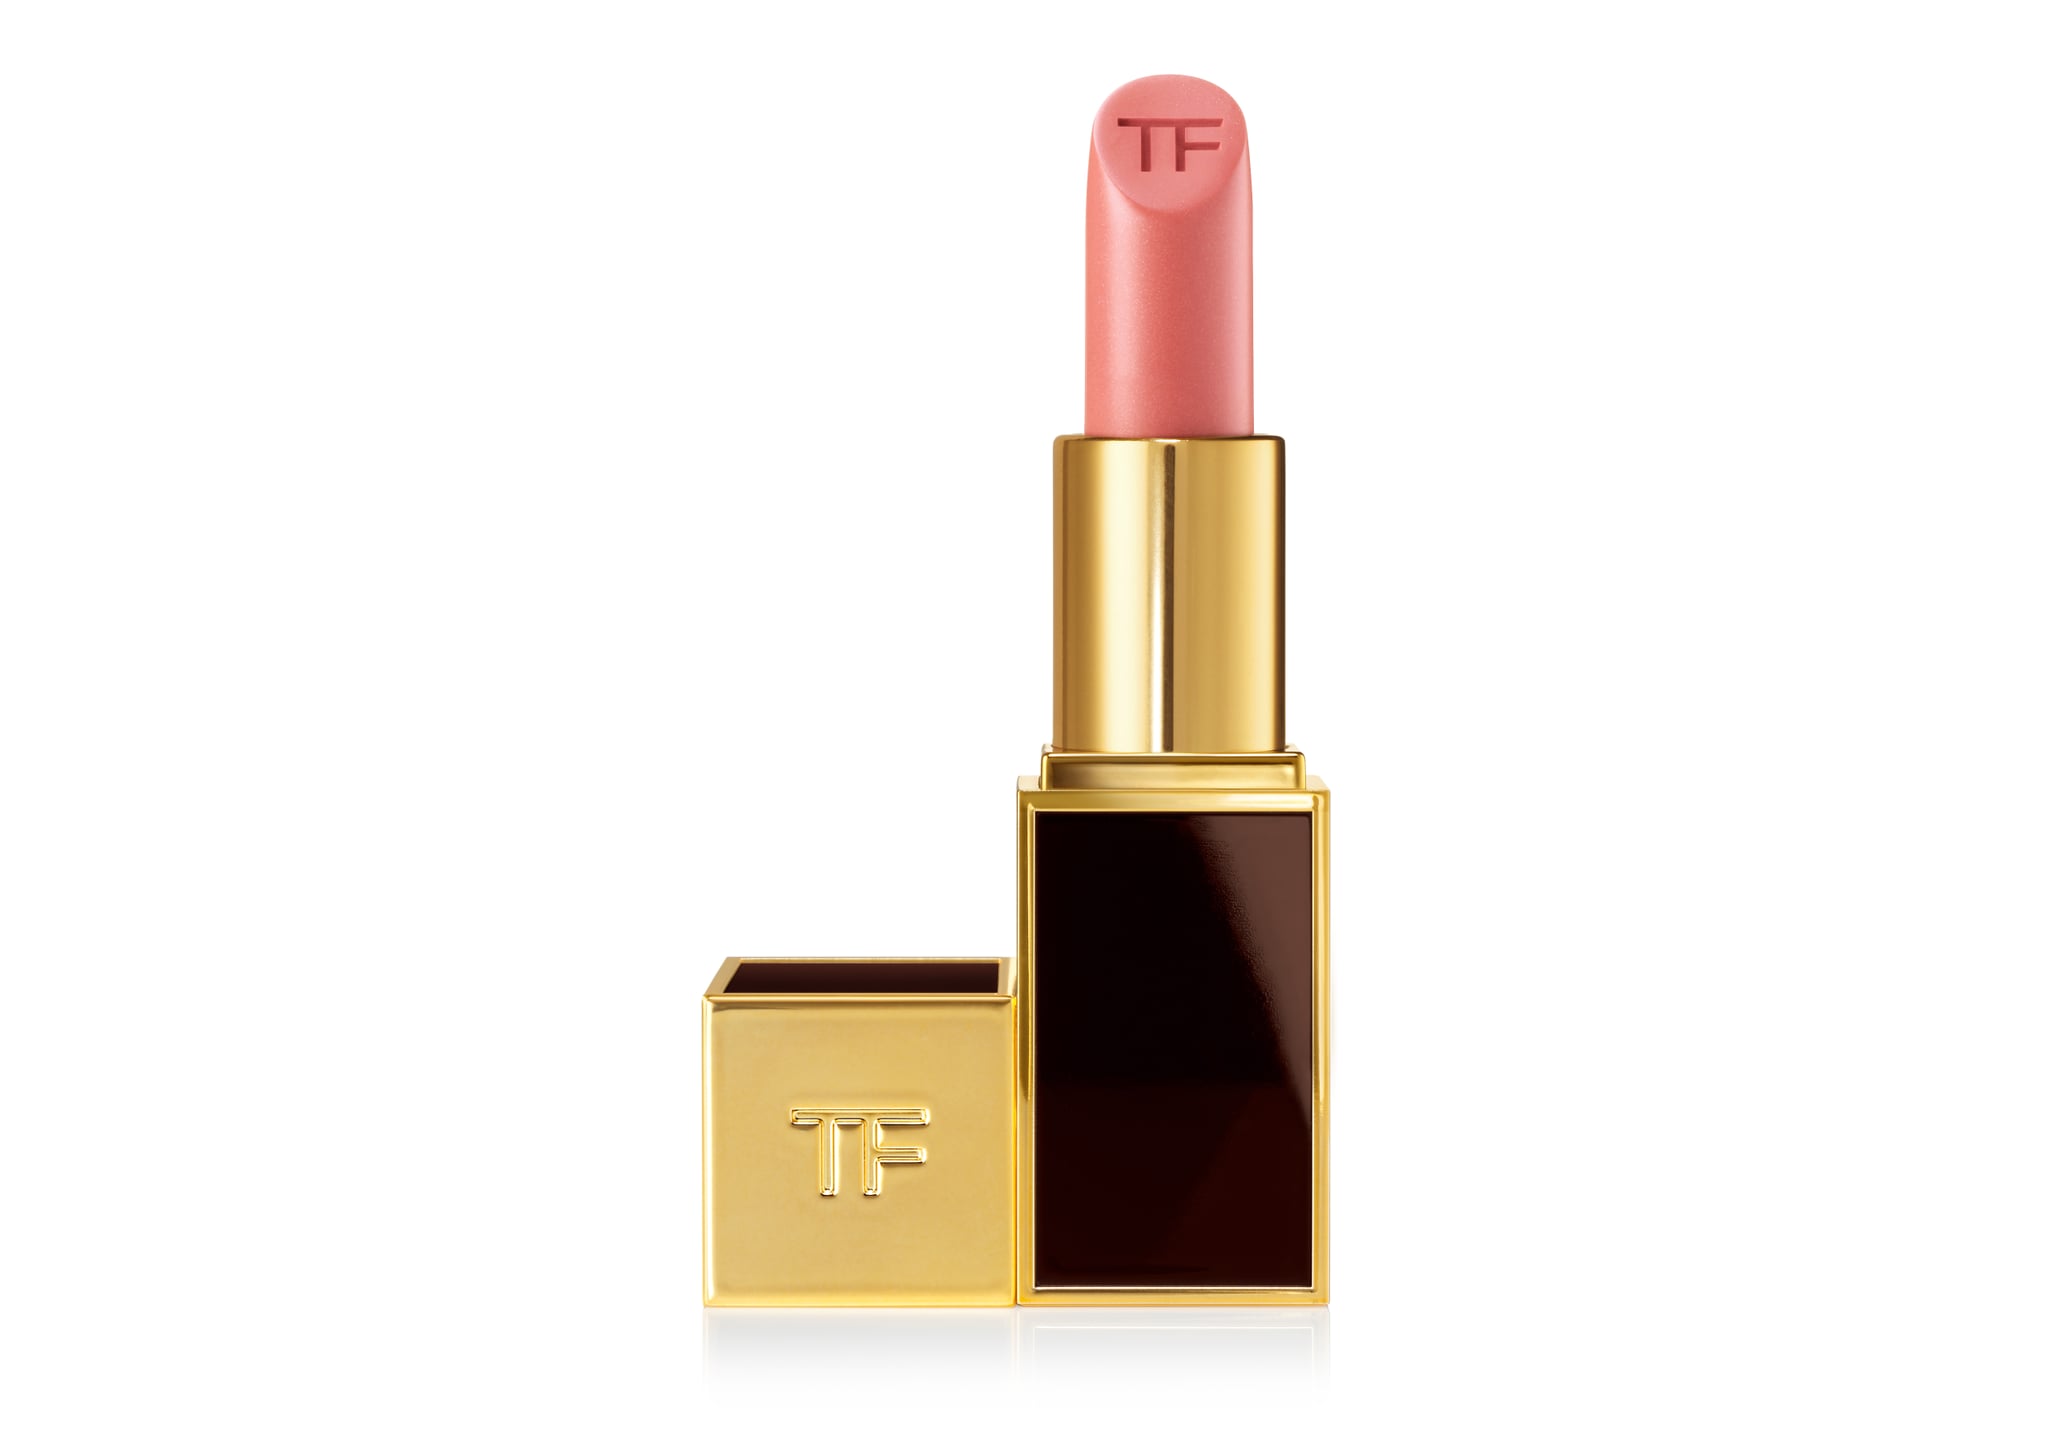 Tom Ford Lipsticks Fall 2015 | POPSUGAR Beauty